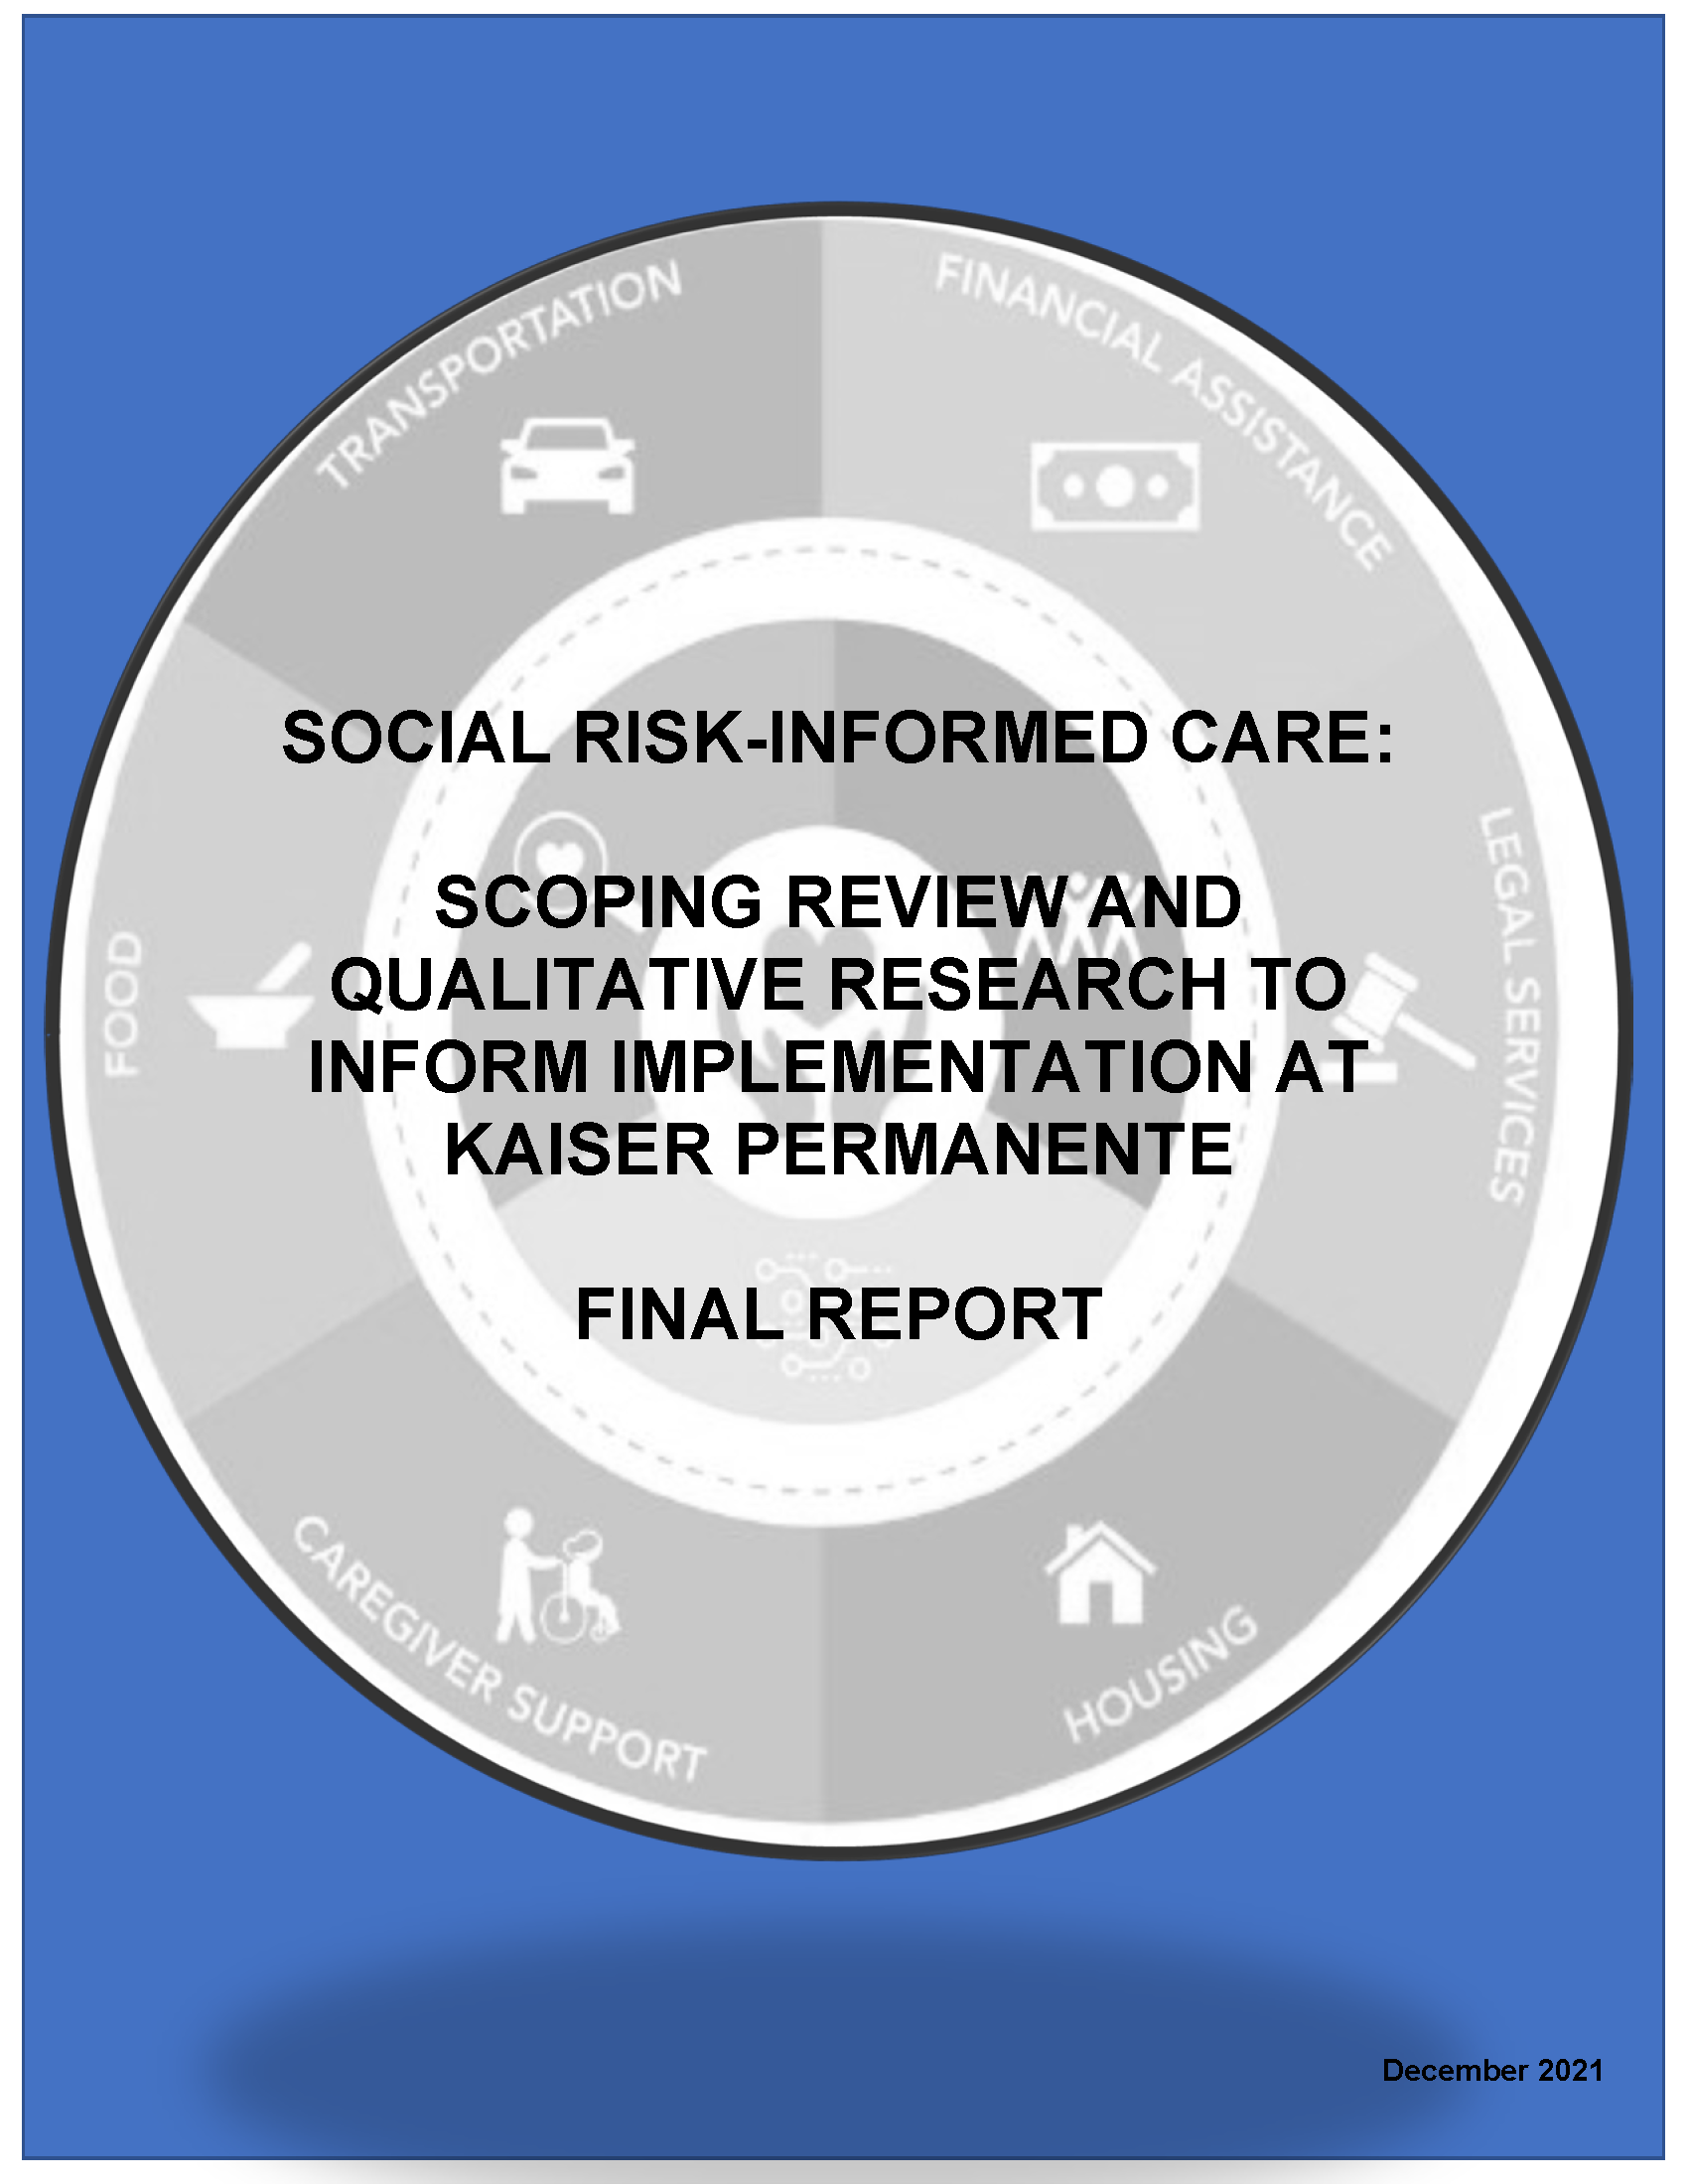 Social-Risk-Informed-Care-Evaluation_Final-Report_Cover.png